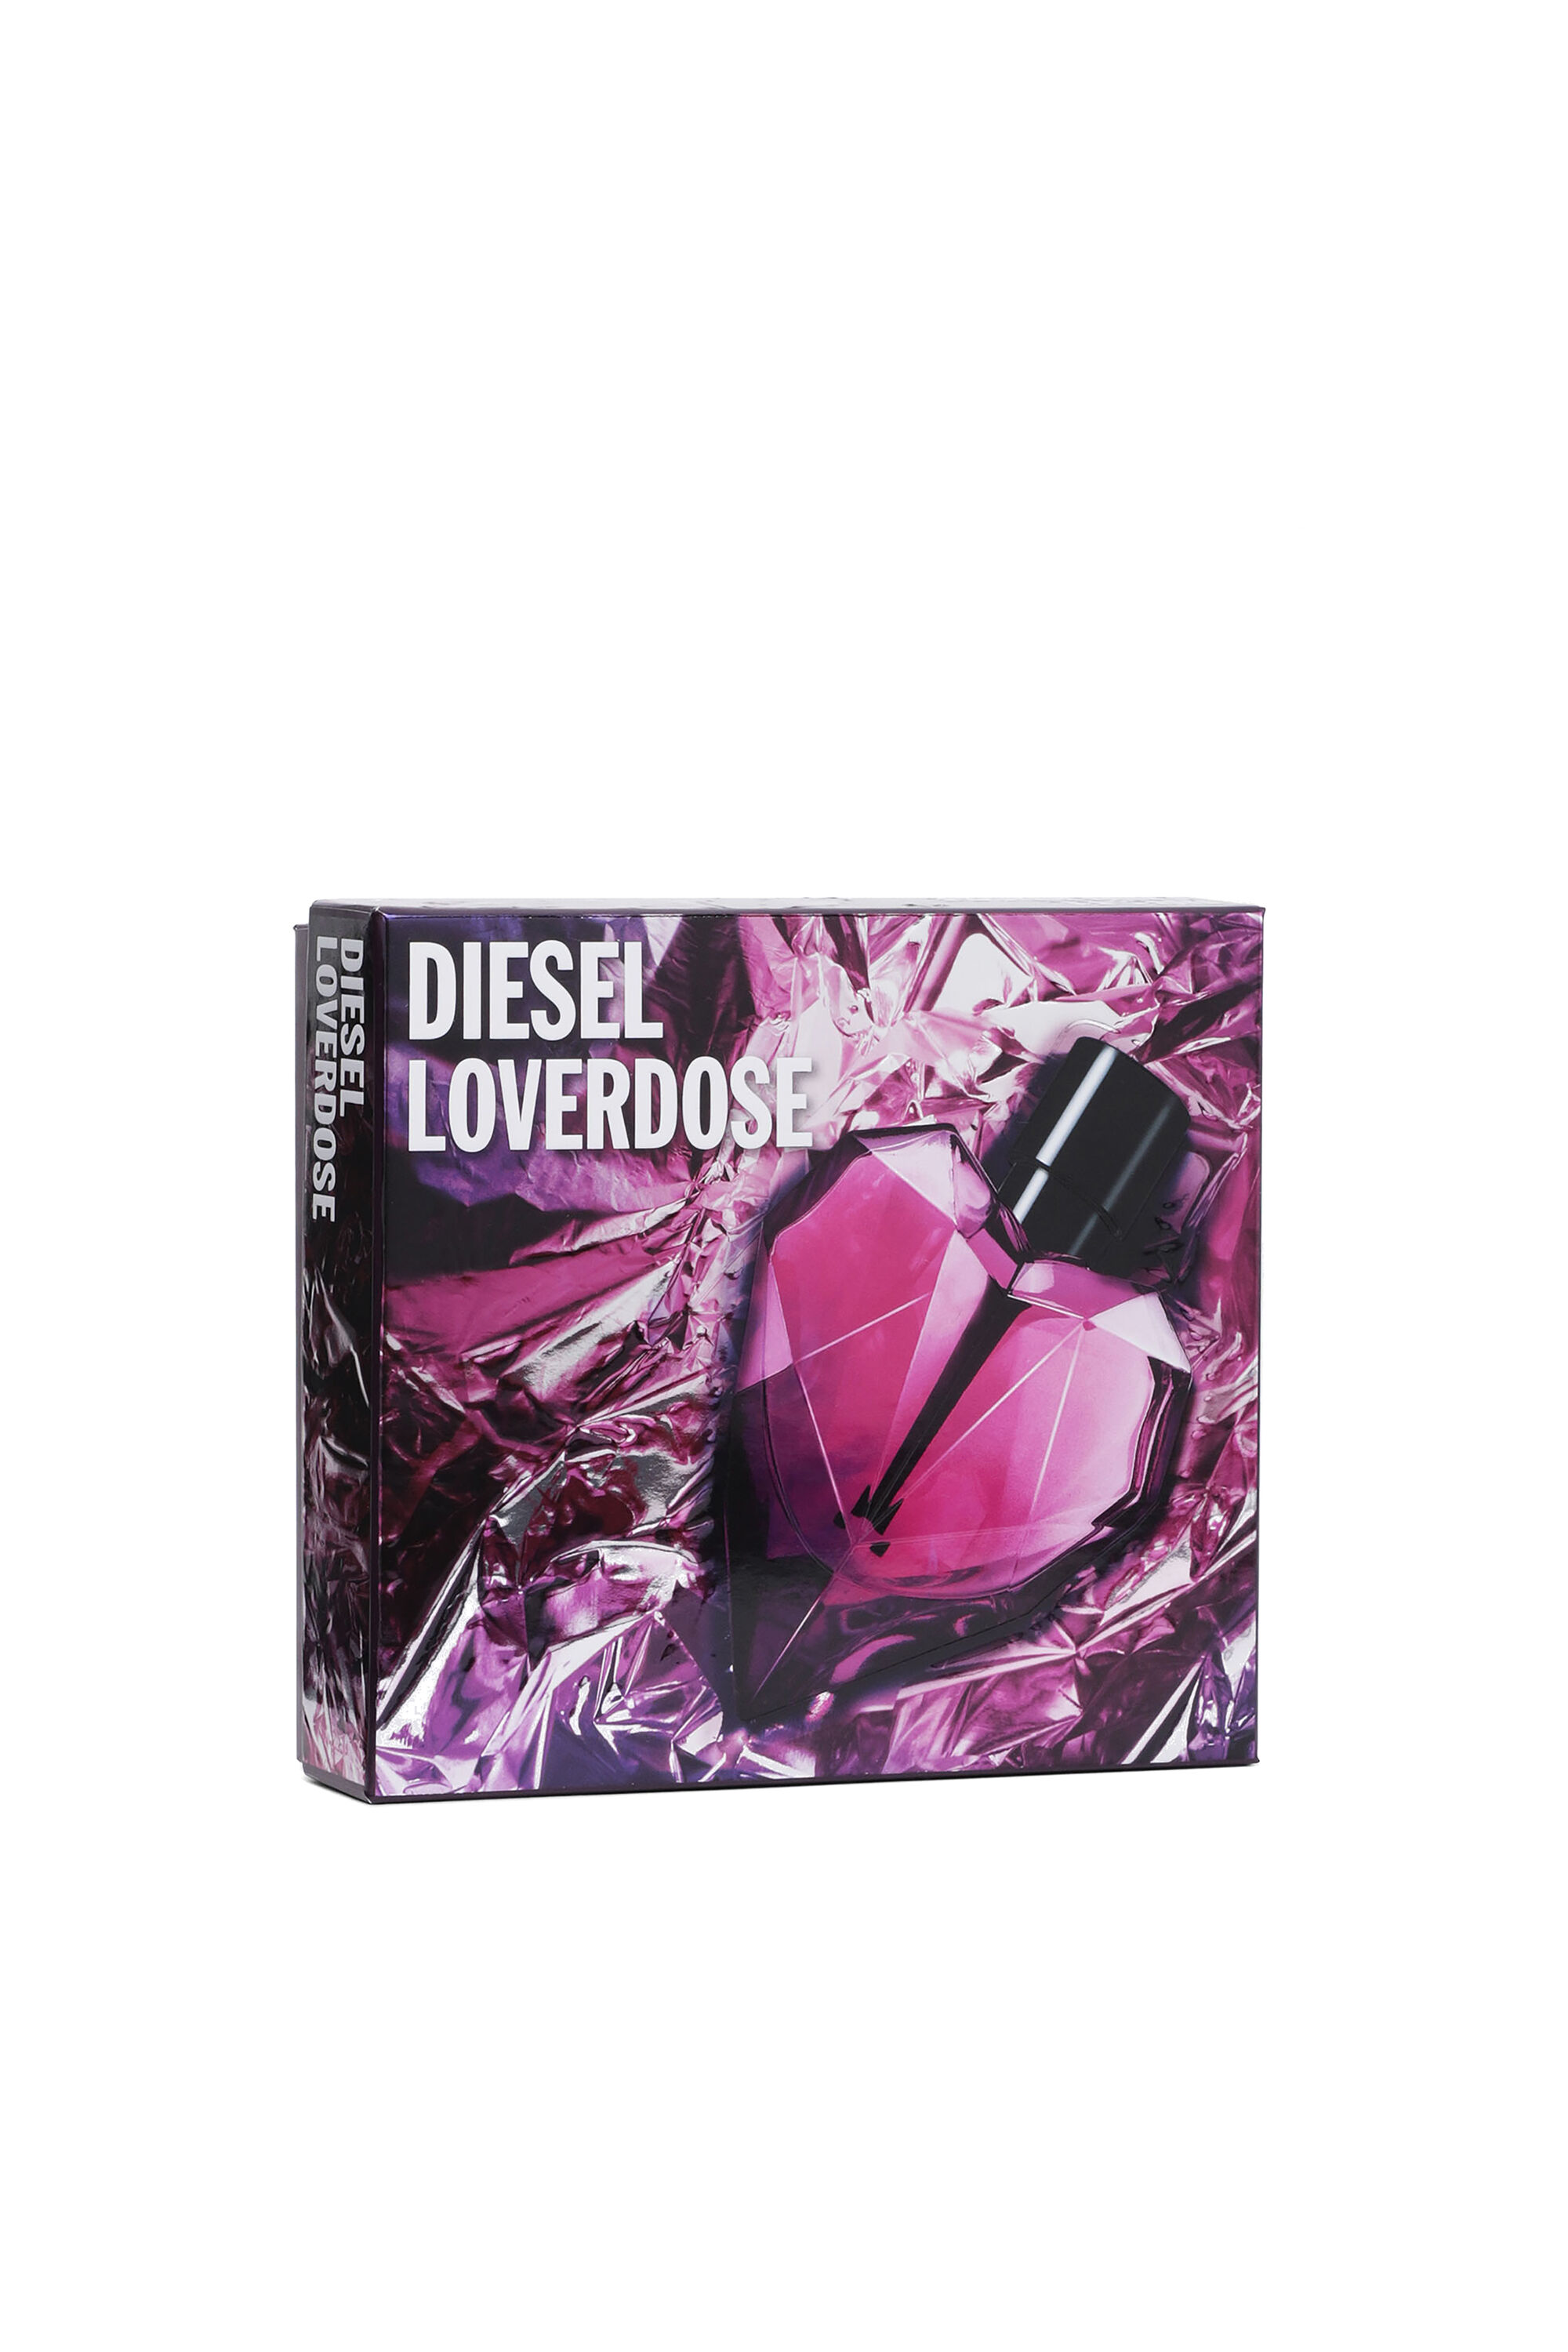 Diesel - LOVERDOSE 30ML GIFT SET, Generic - Image 1